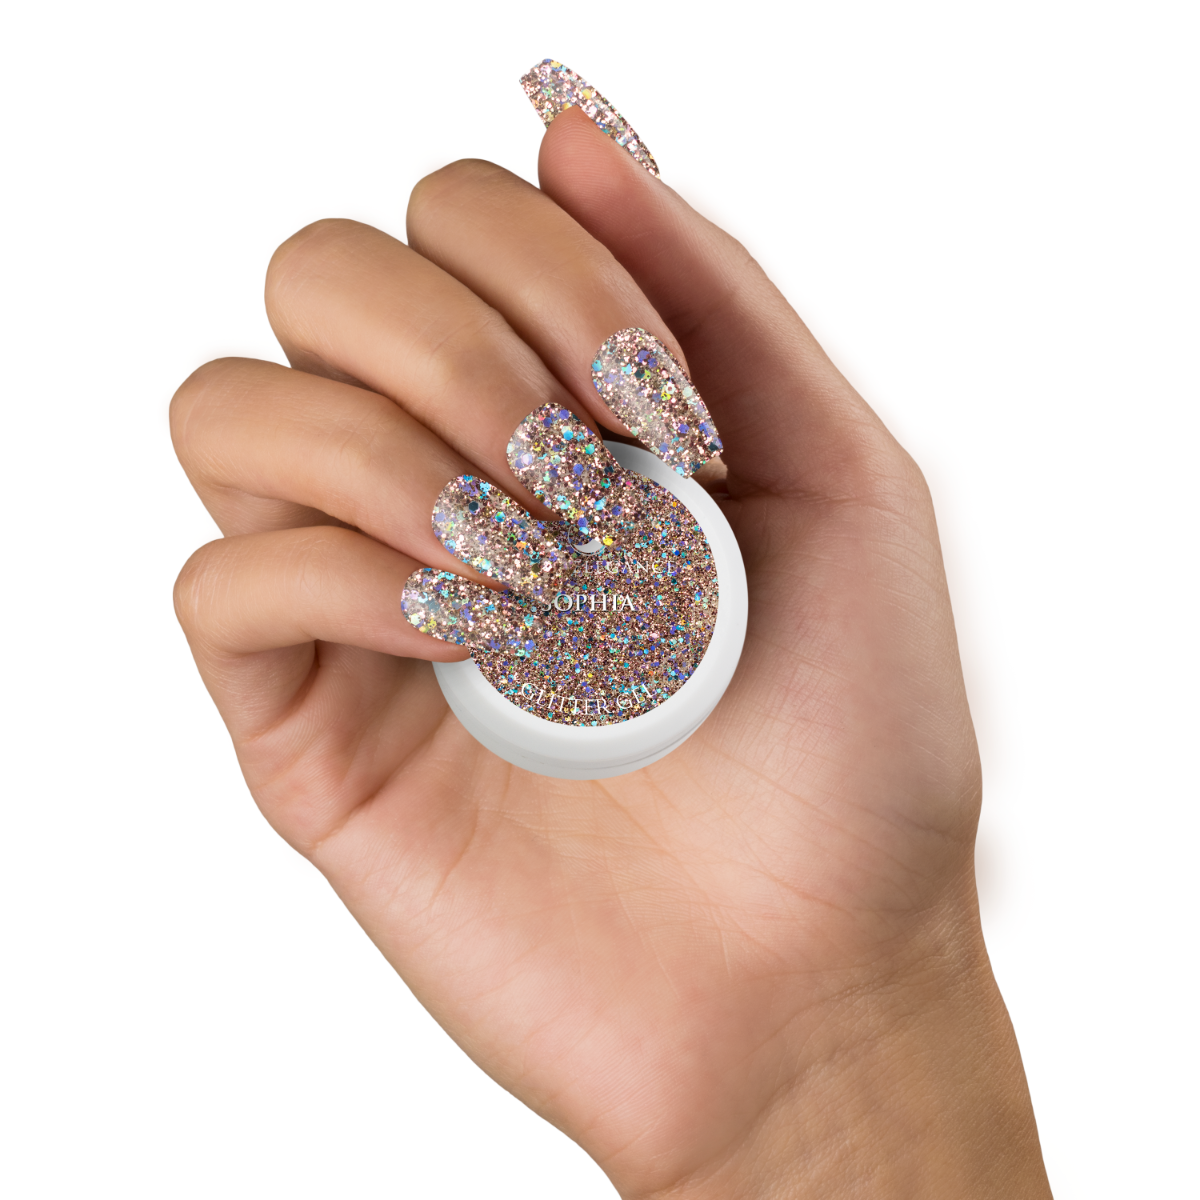 Light Elegance Glitter Gel - Sophia :: New Packaging - Creata Beauty - Professional Beauty Products